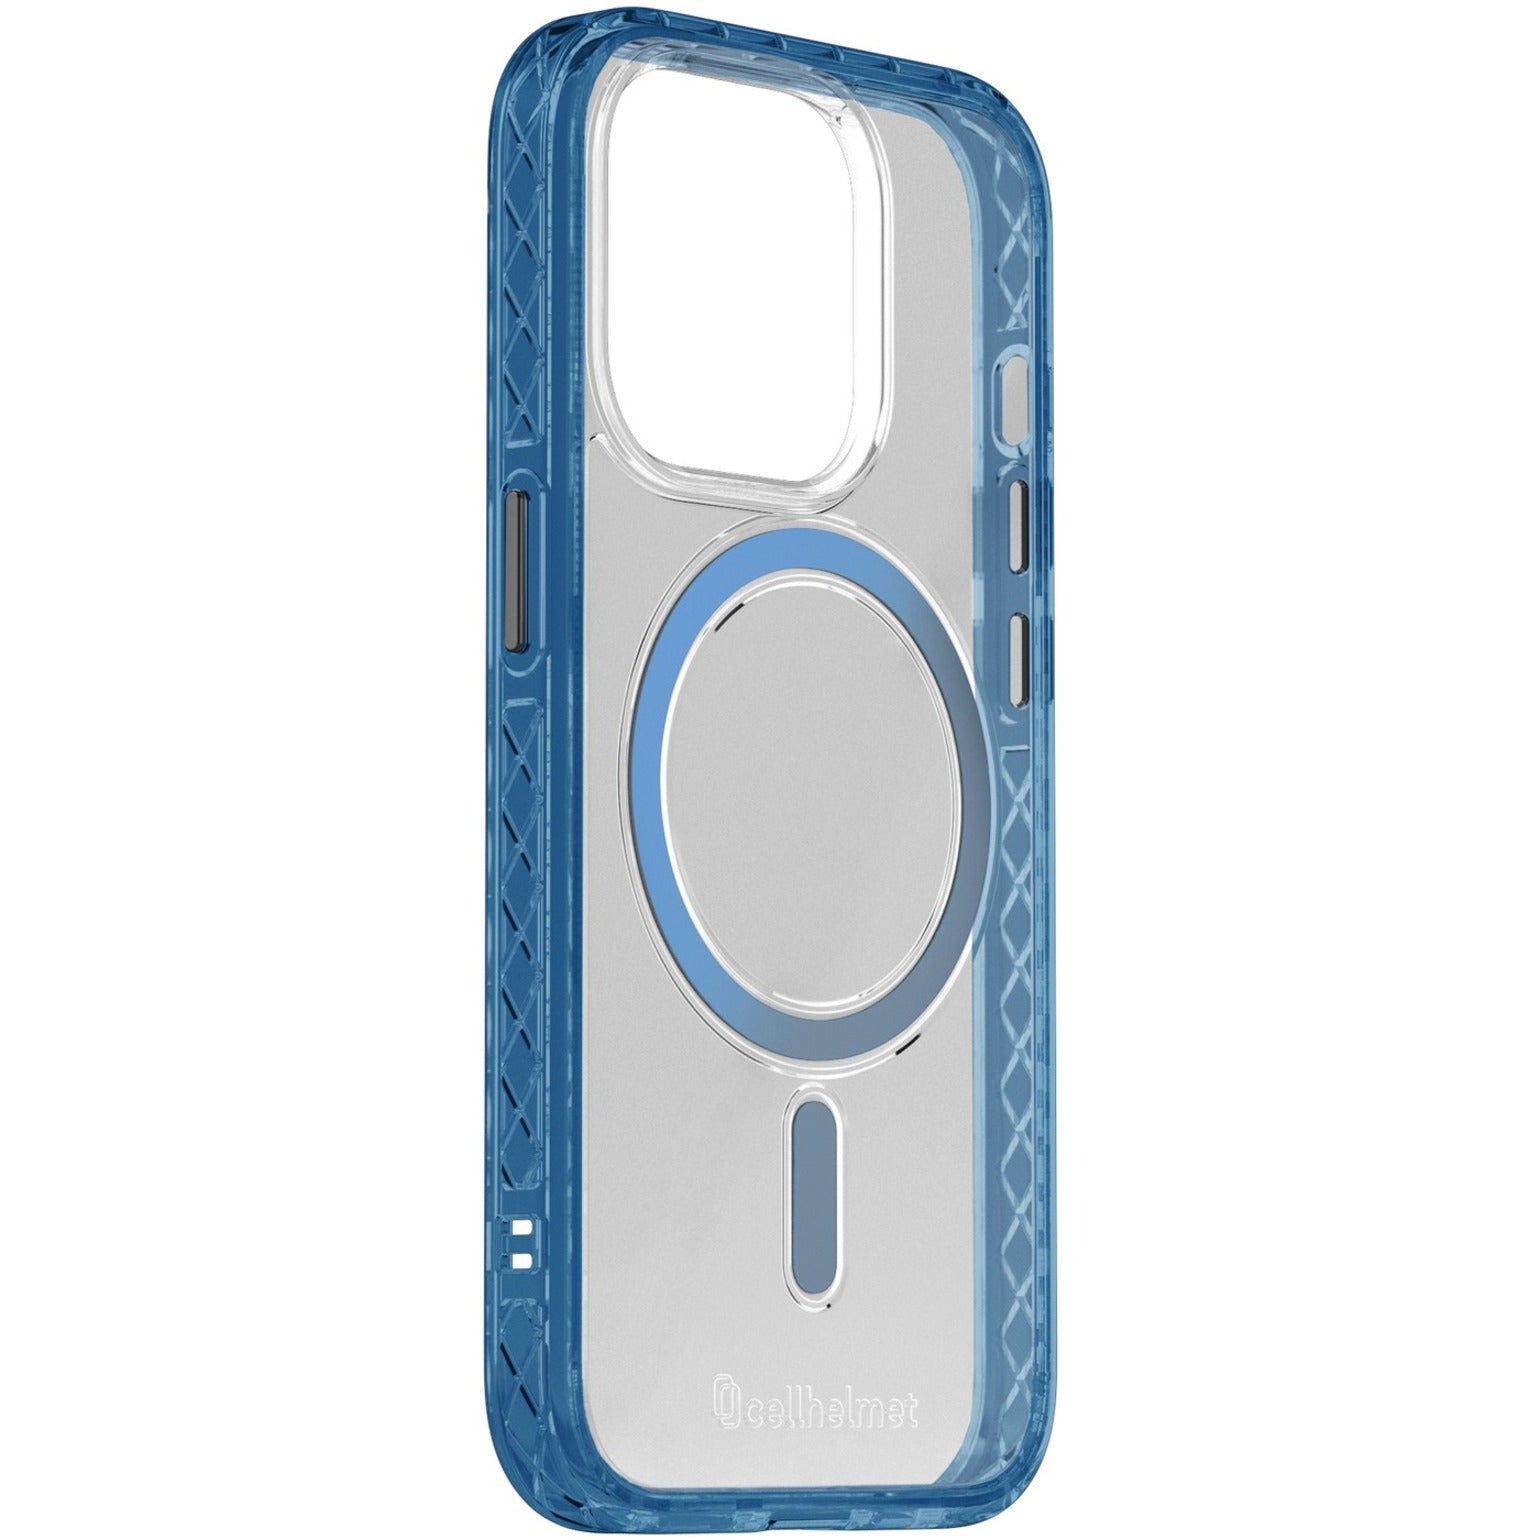 Cellhelmet Magnitude Pro Smartphone Case - Deep Sea Blue [Discontinued]